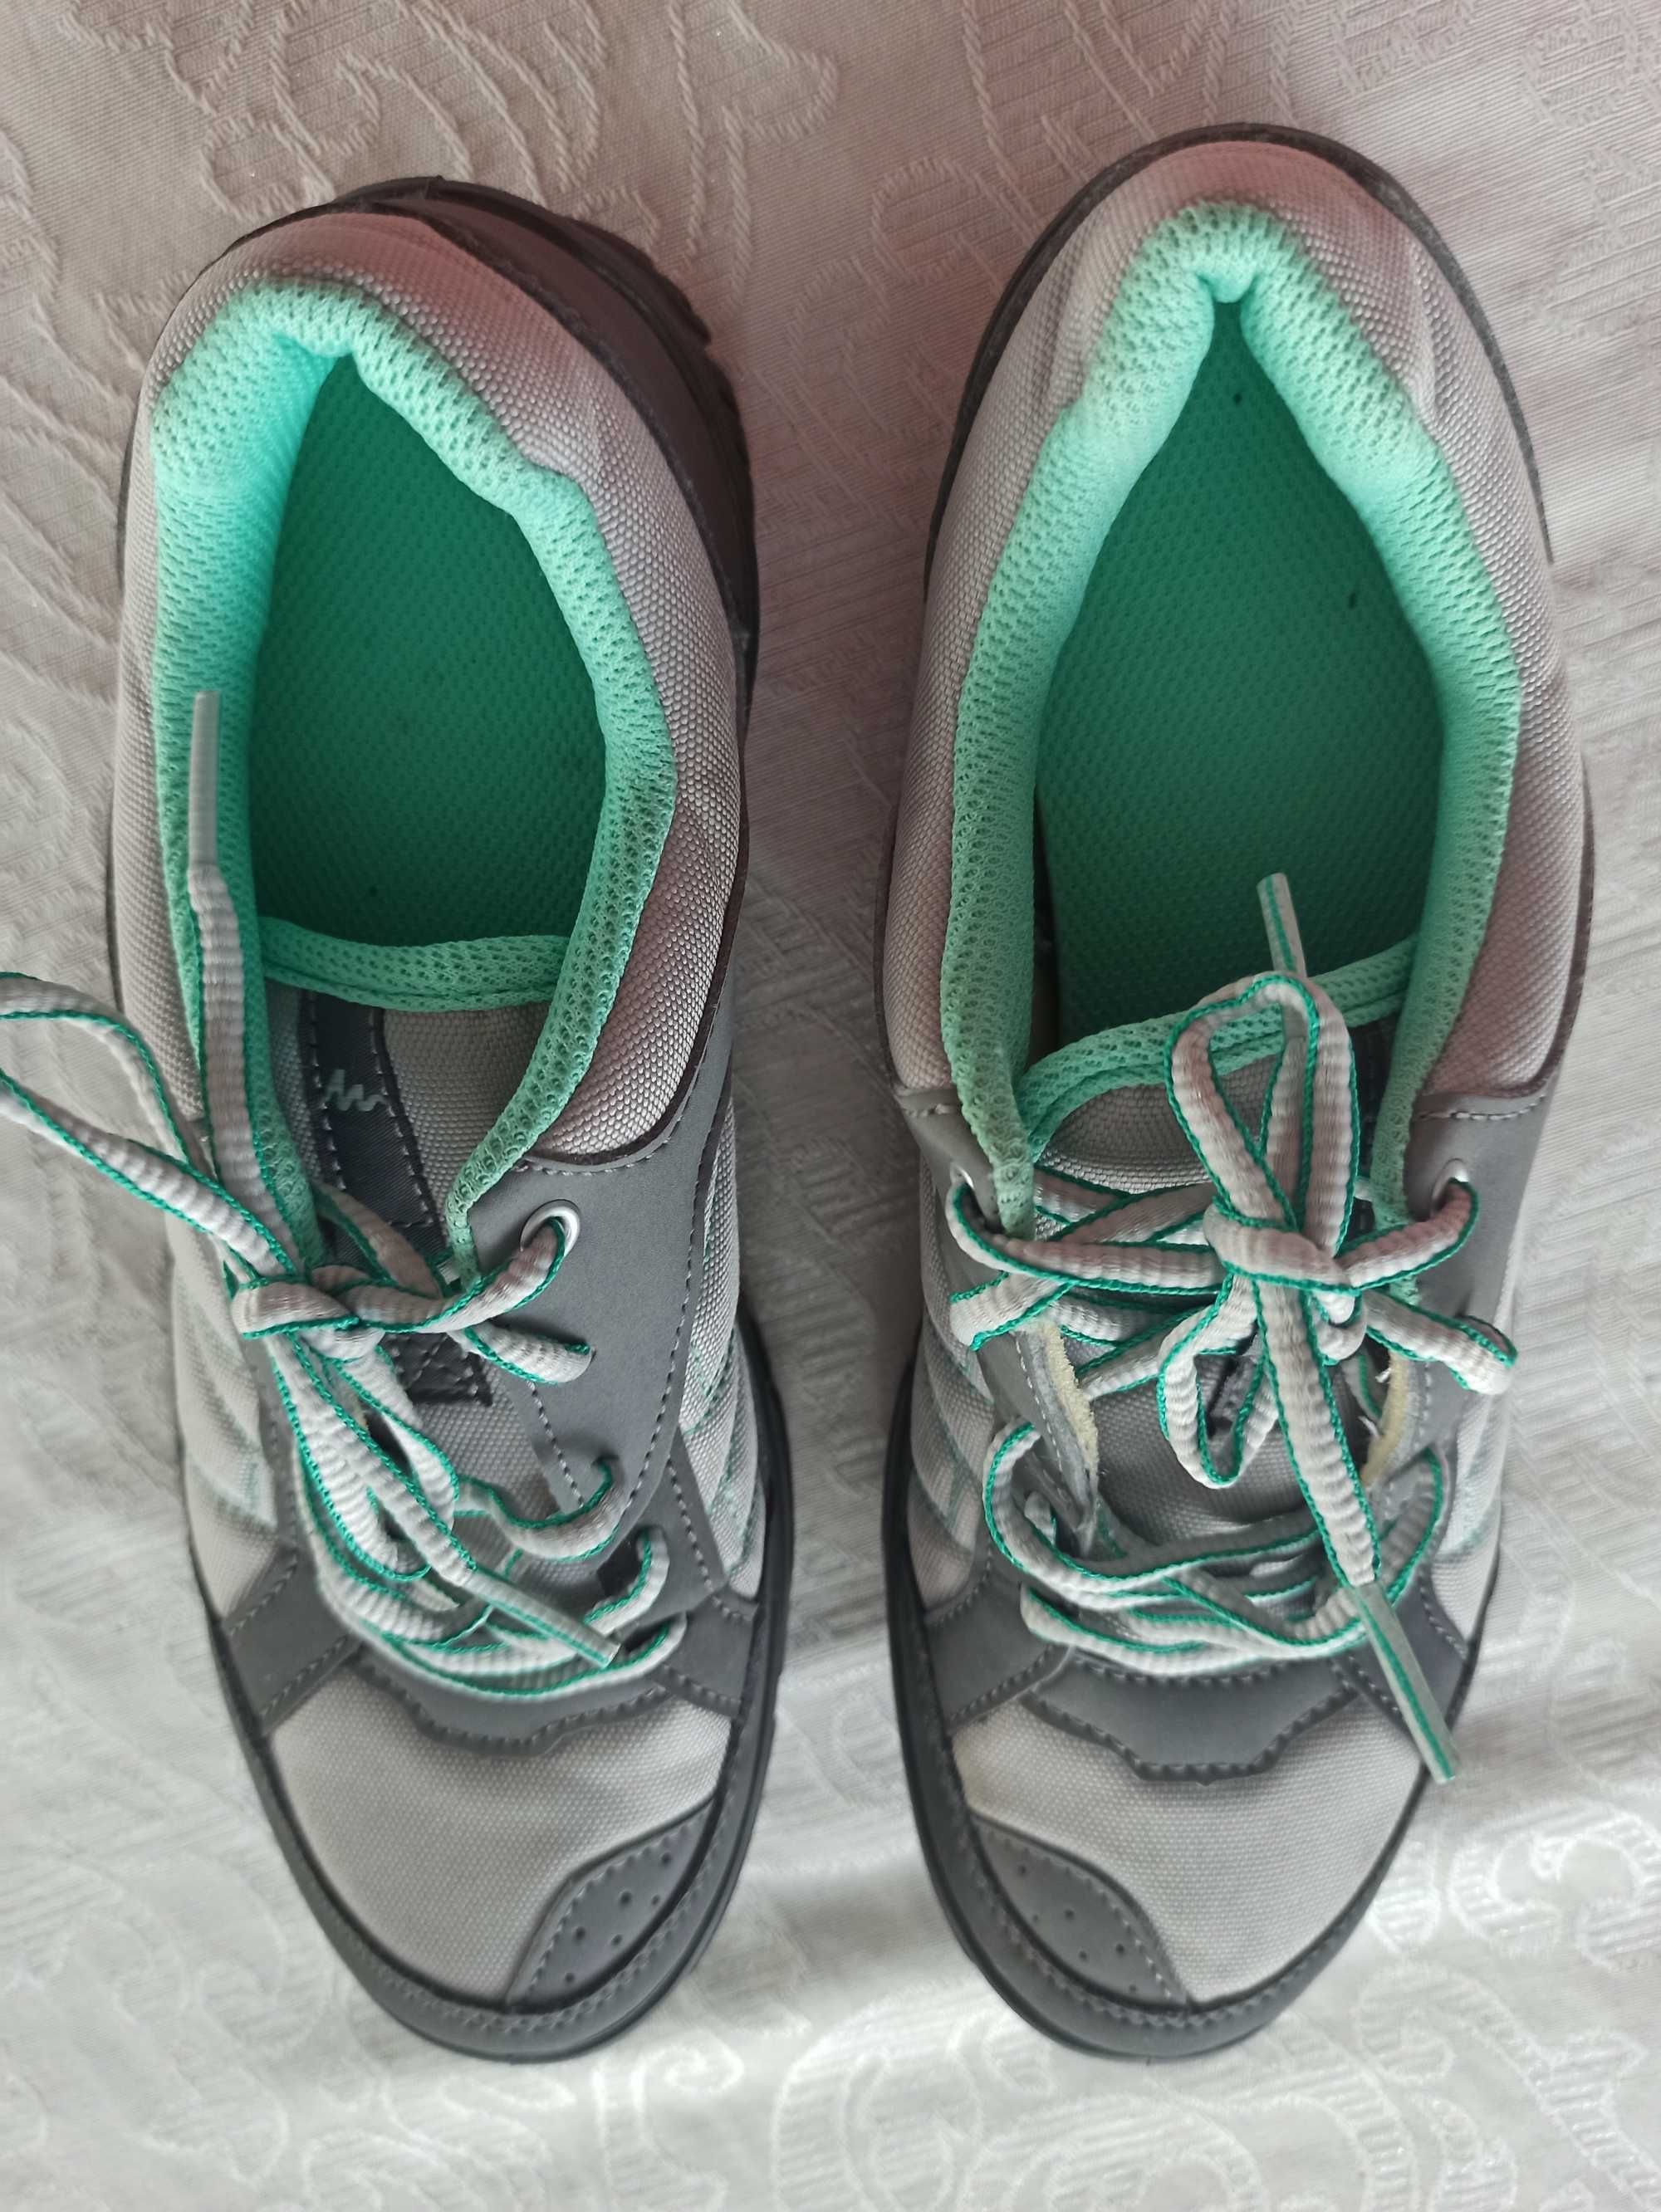 NOWE buty trekkingowe Decathlon 38 / 39 ładne kolory!